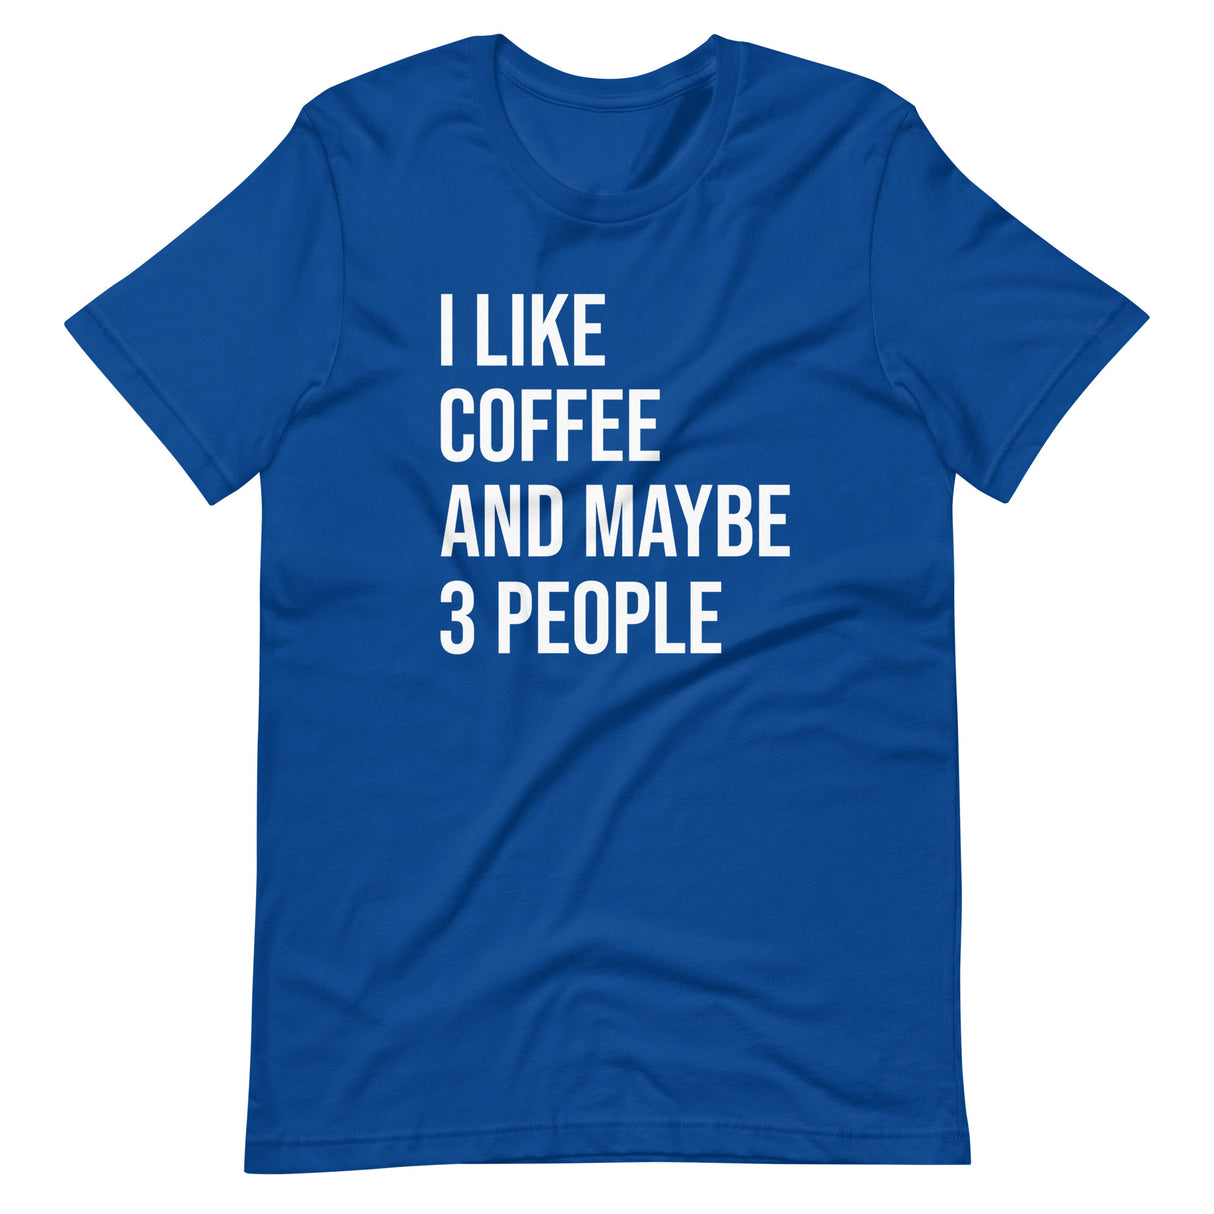 I Like Coffee And Maybe 3 People Shirt